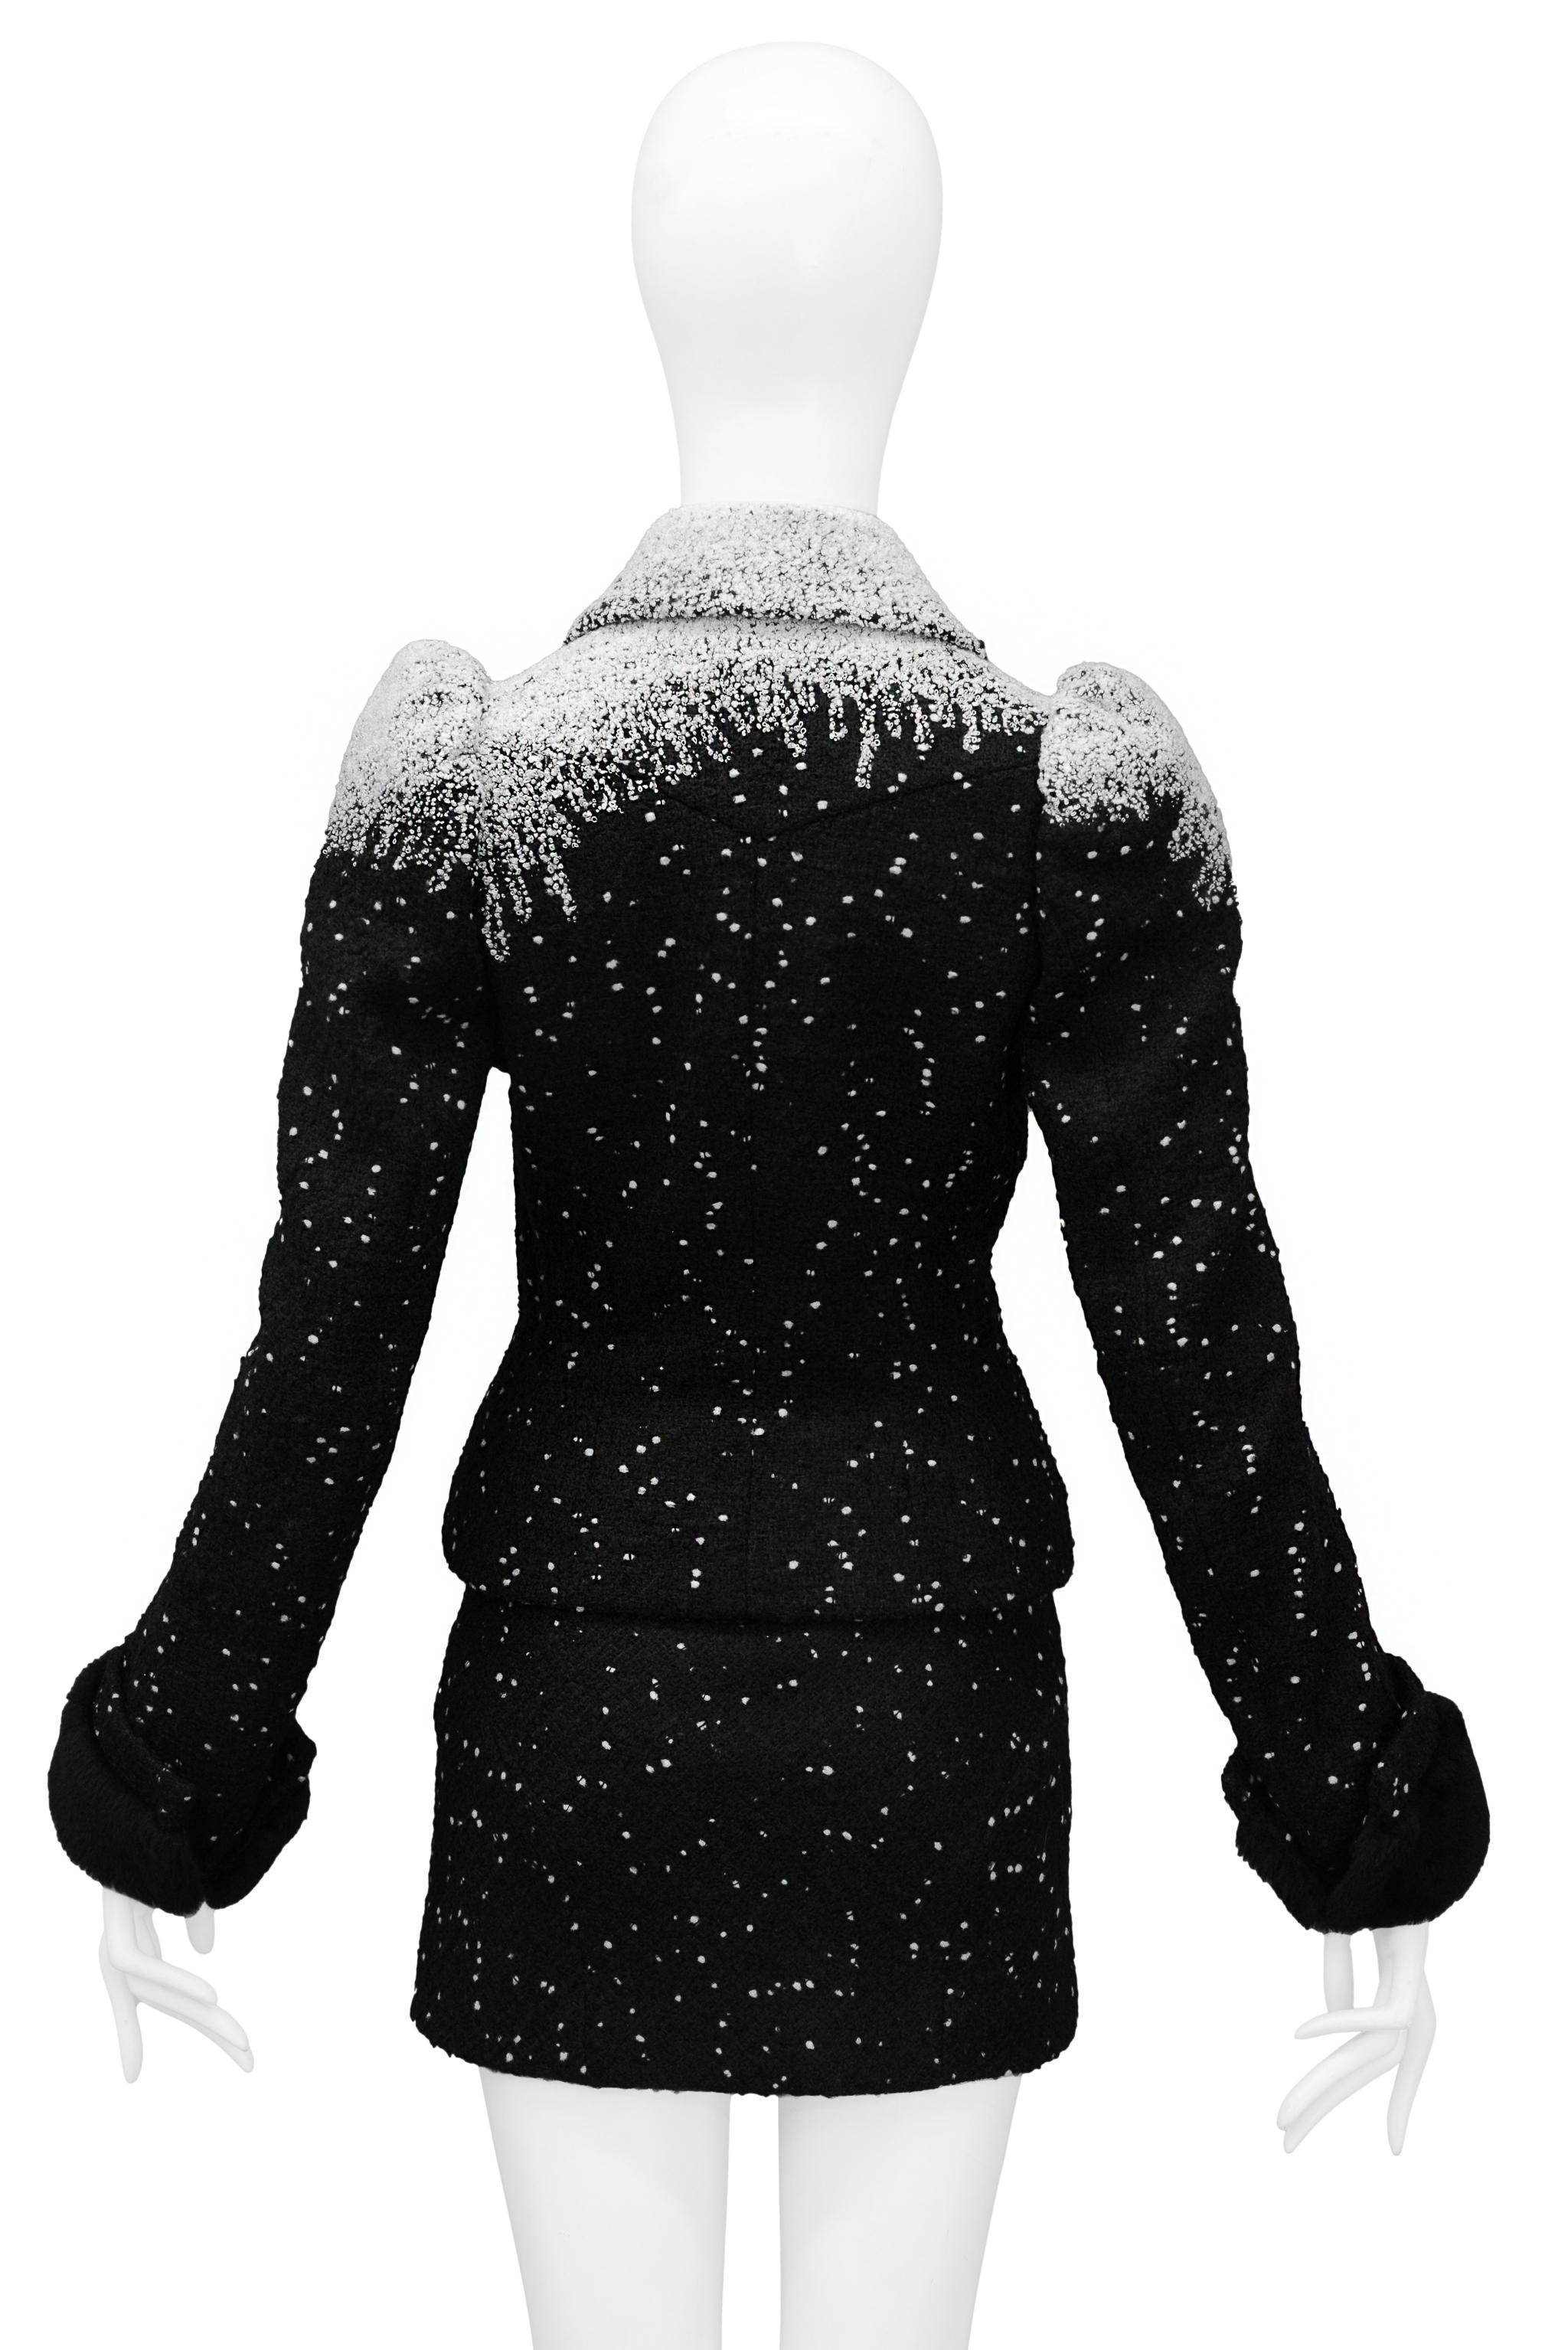 John Galliano Black & White Snowstorm Stitch Jacket And Skirt 1996 4